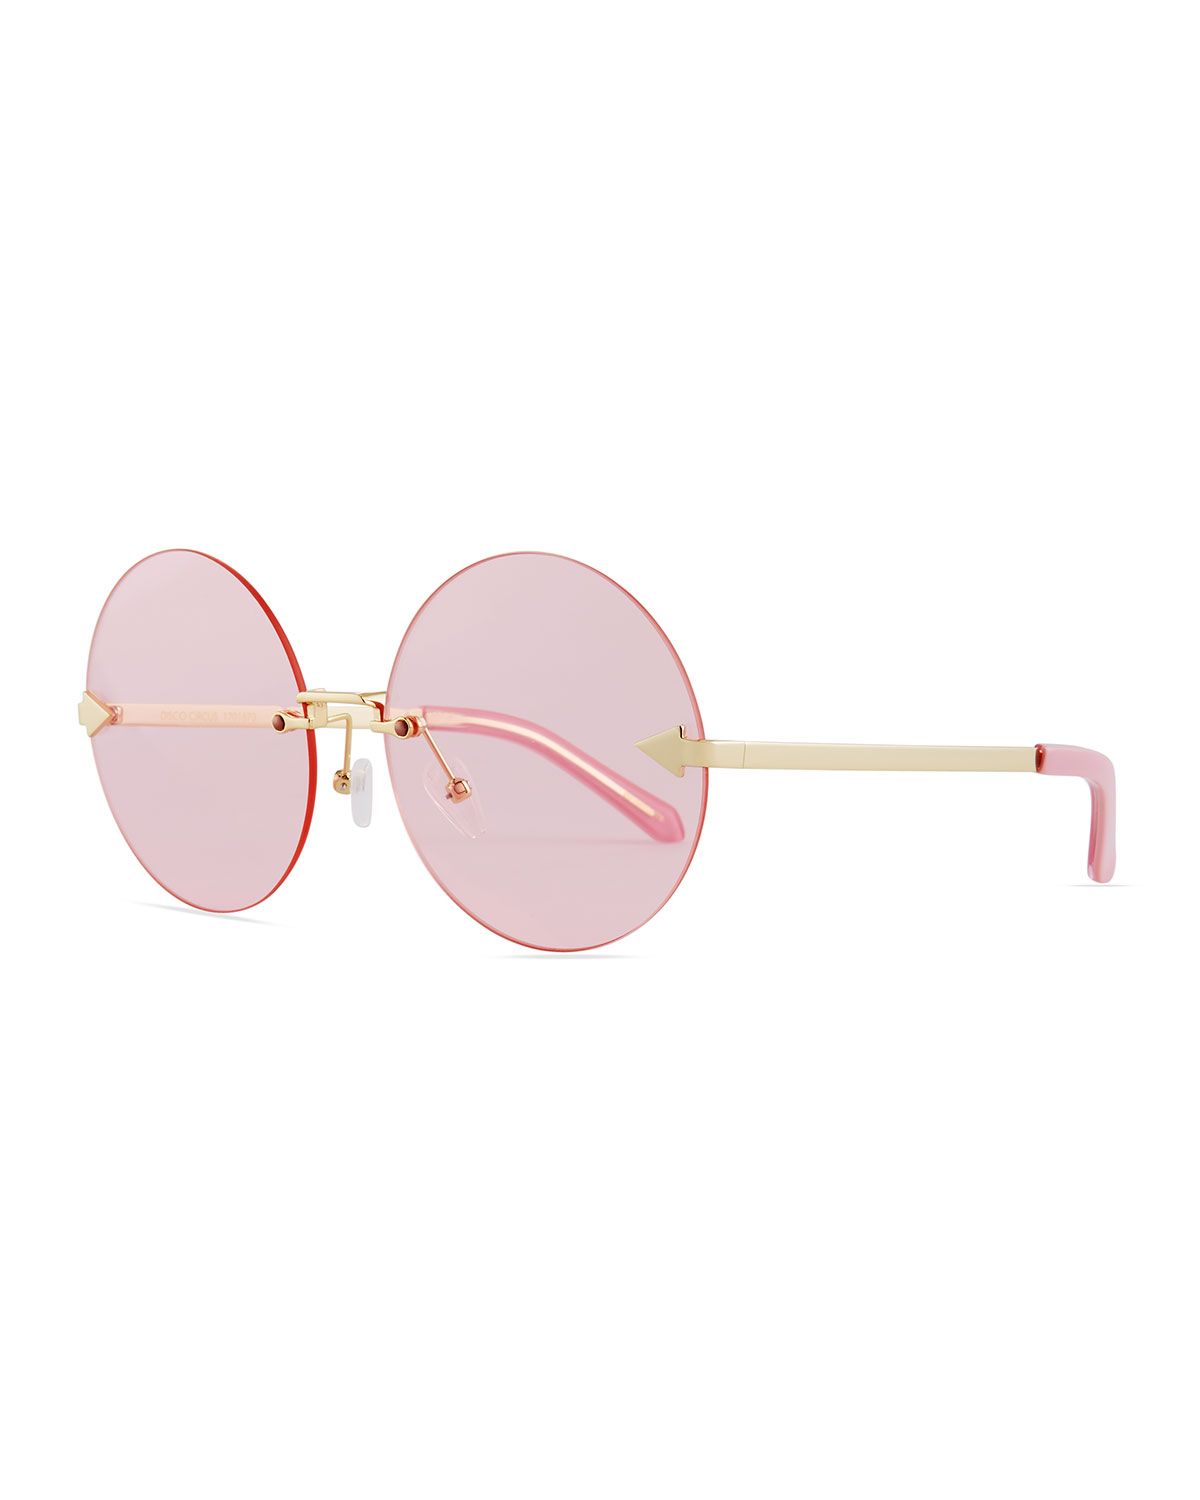 Disco Circus Rimless Round Sunglasses, Pink/Gold | Neiman Marcus